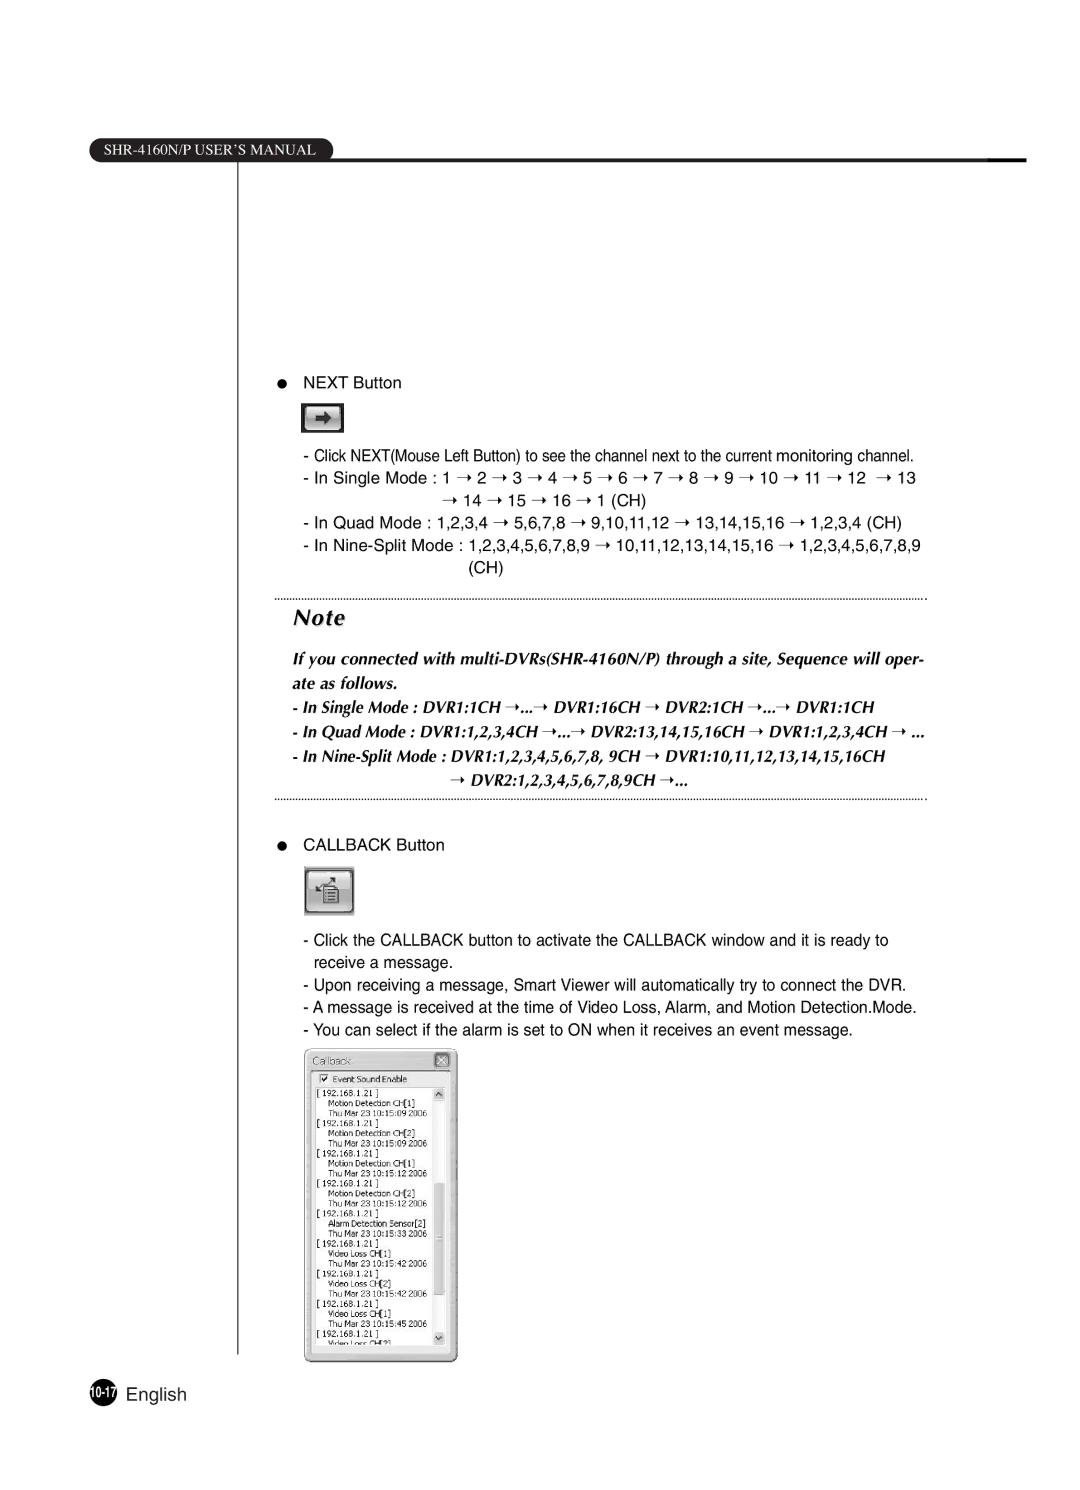 Samsung SHR-4160P manual 10-17English 